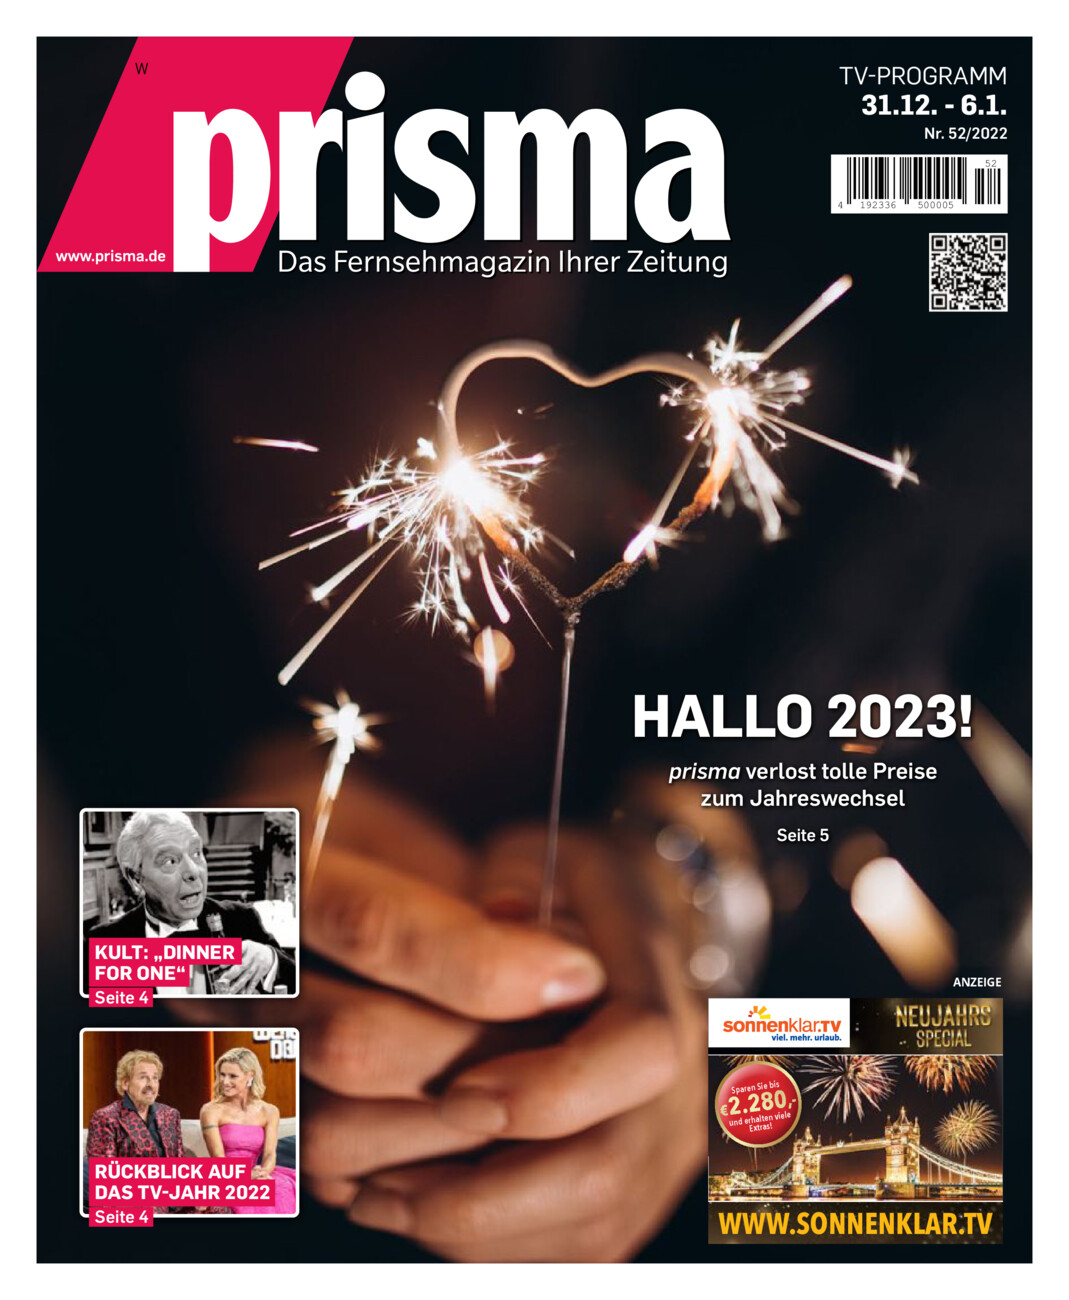 Prisma 31.12.2022-6.1.2023